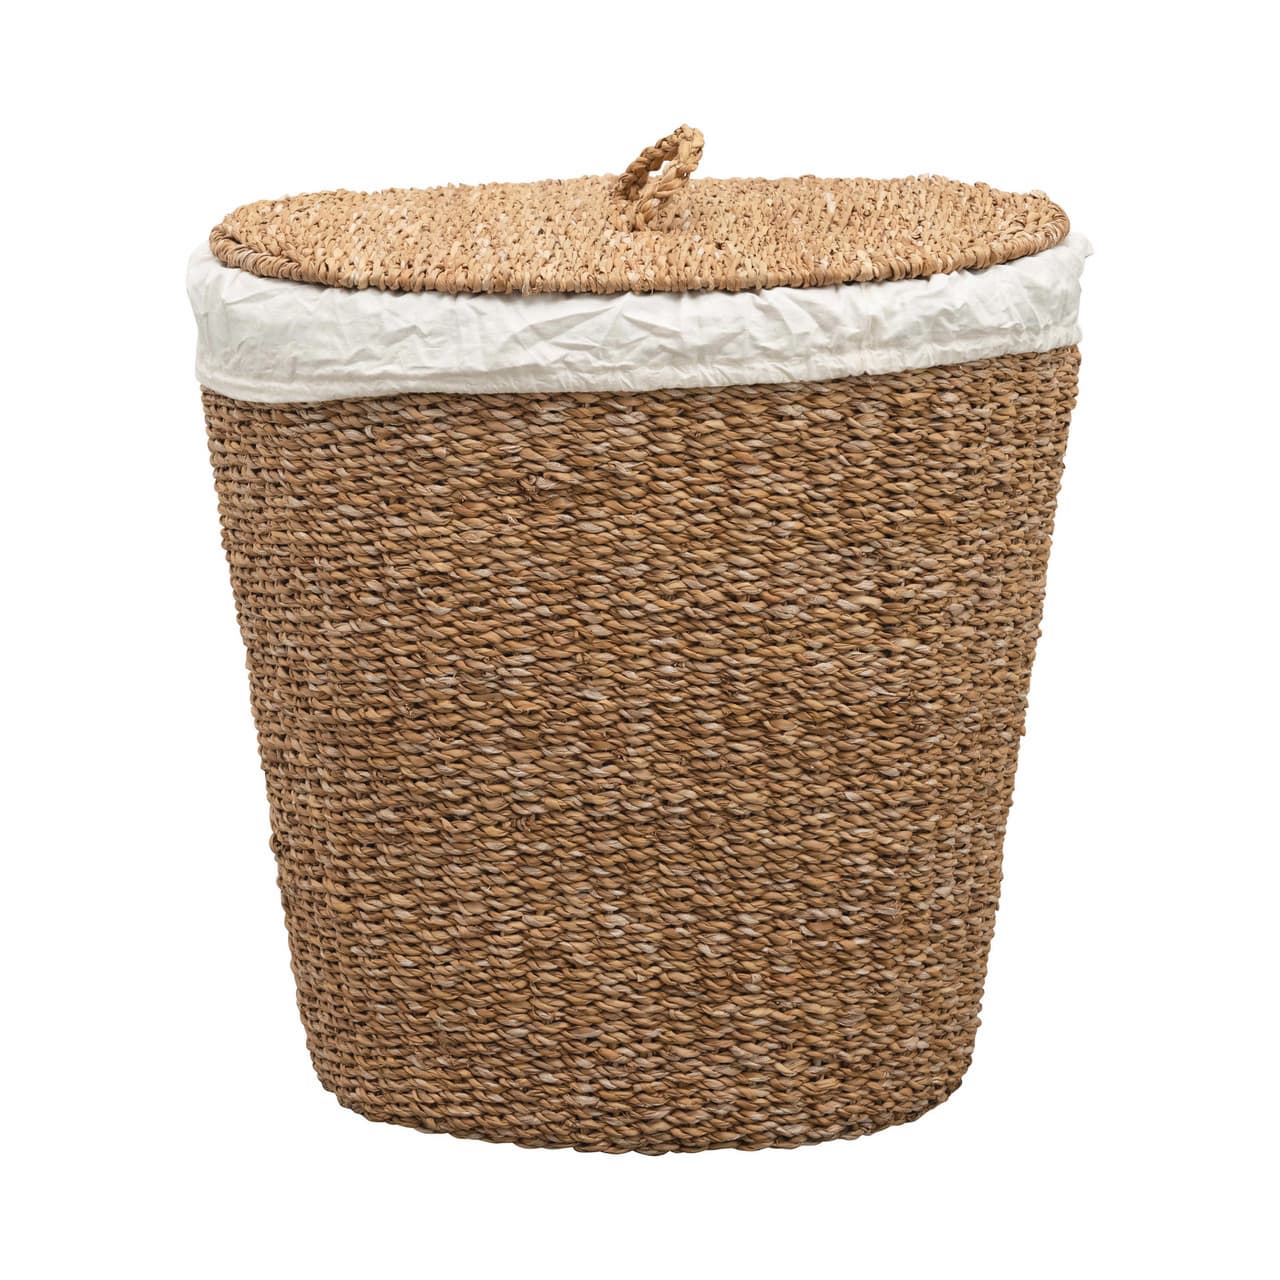 Seagrass Laundry Basket with Lid_ Wicker Storage Basket